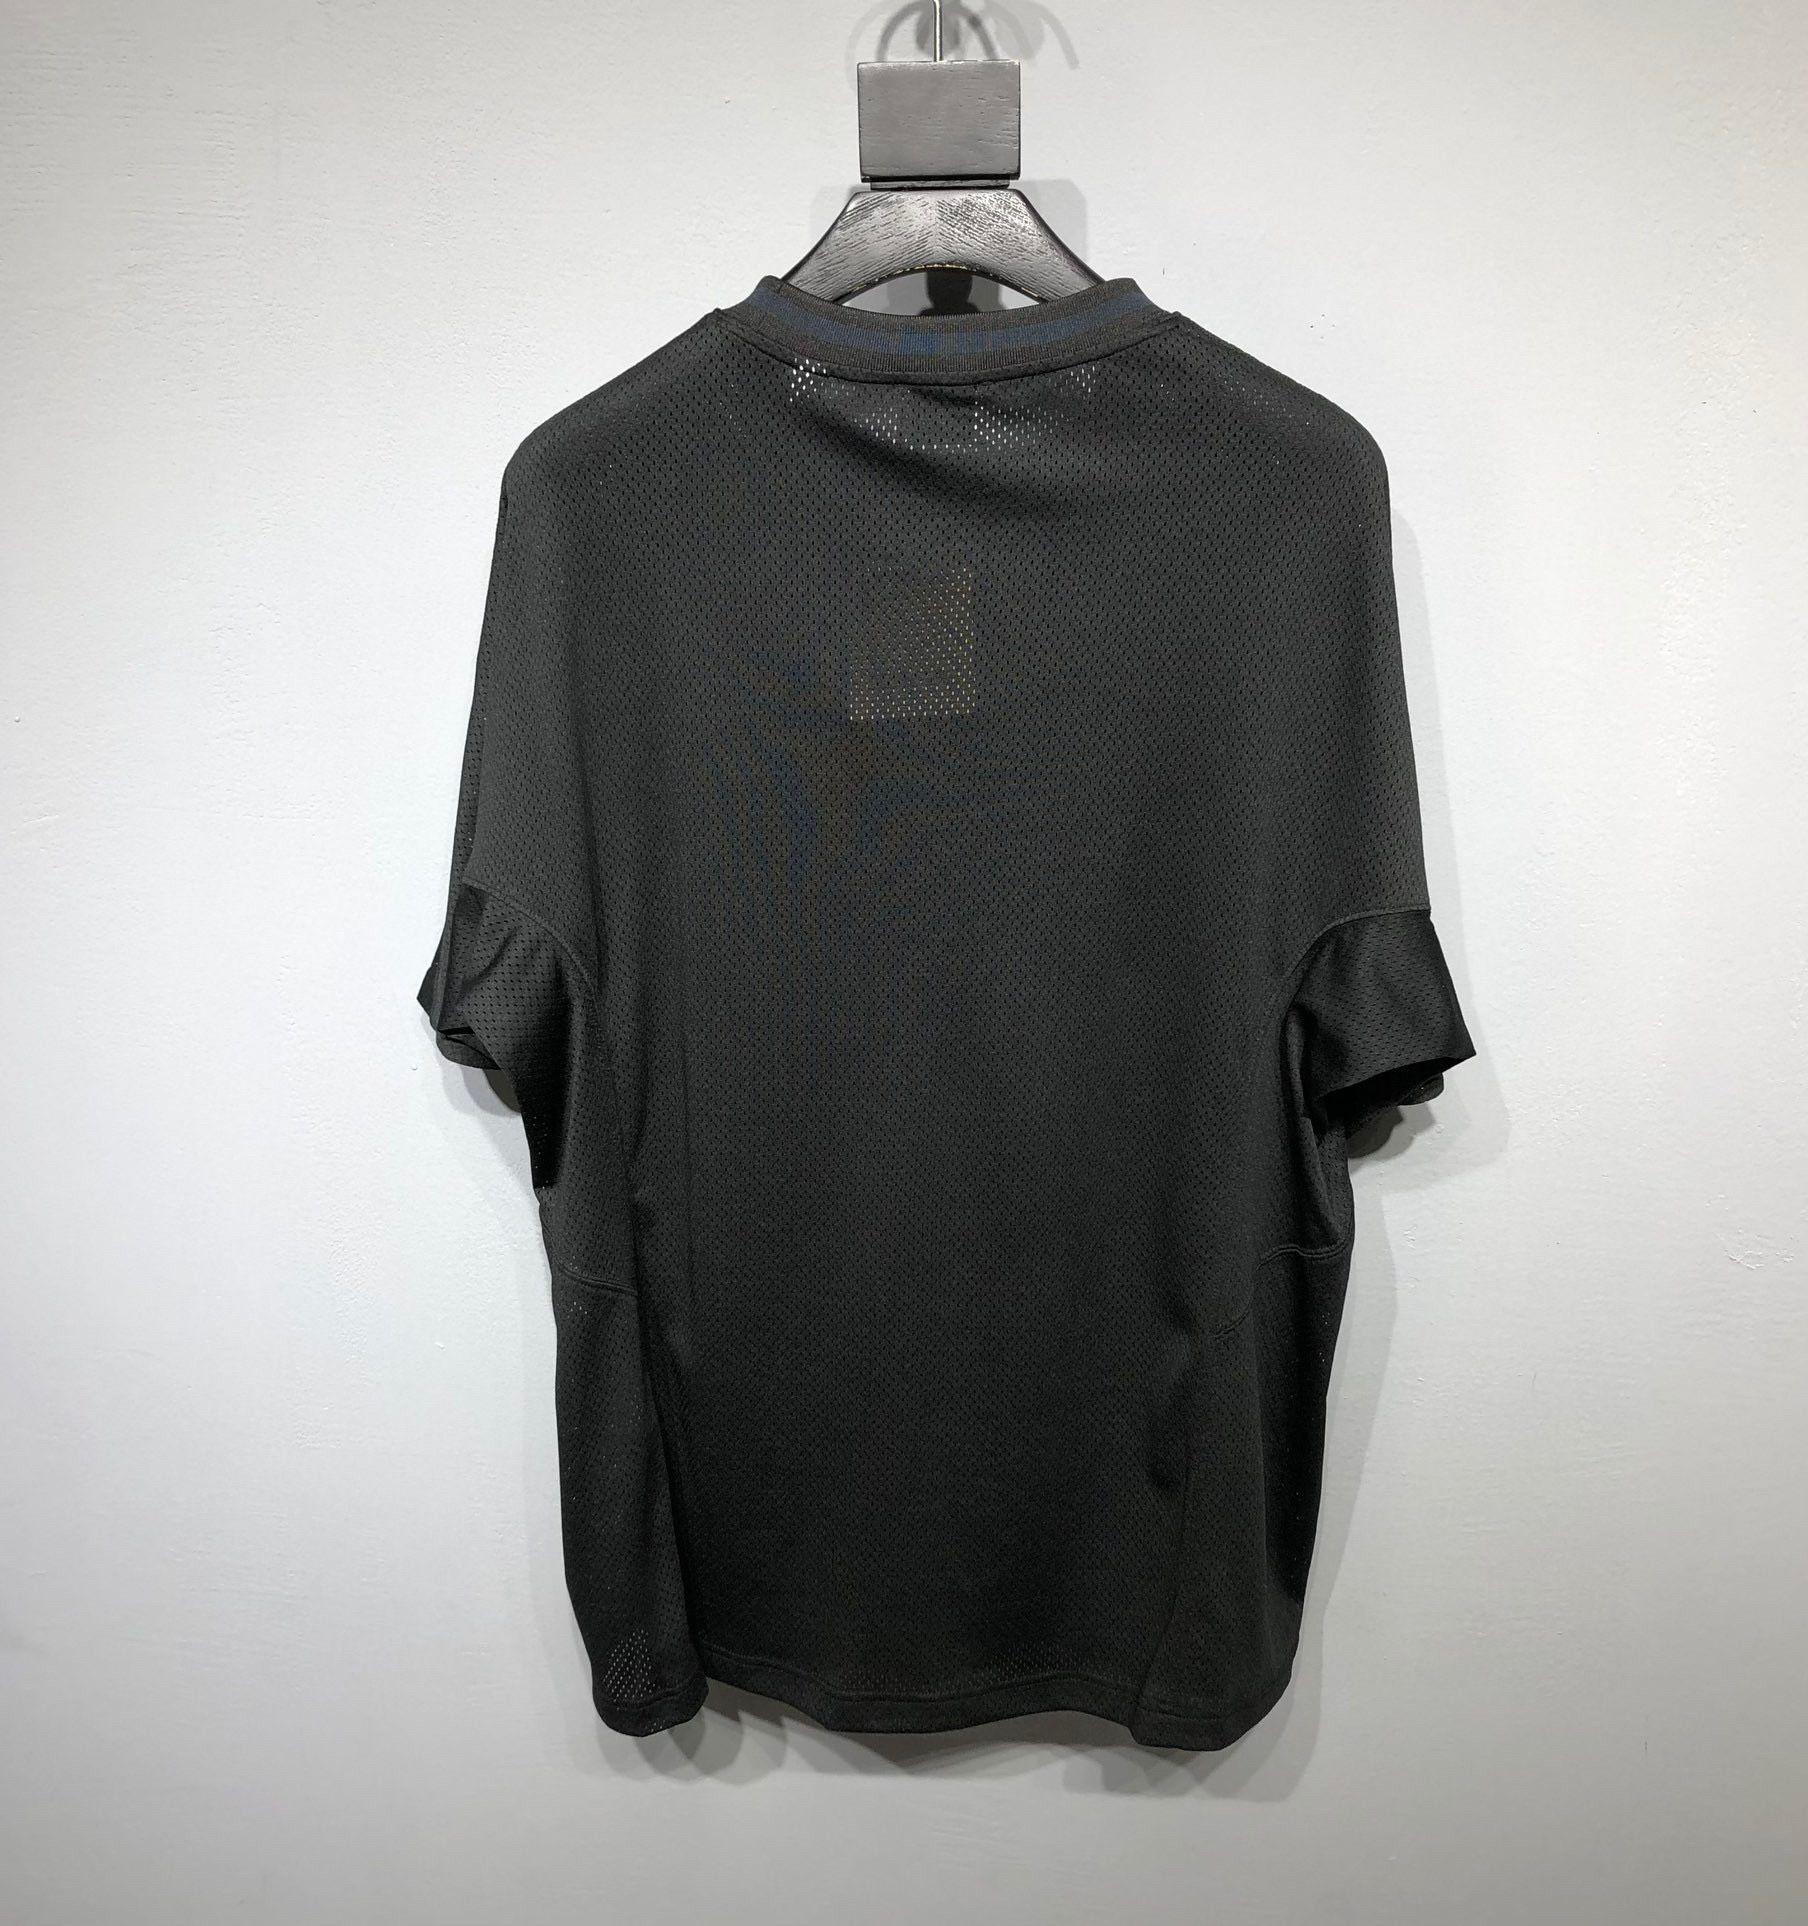 slogan-print-nylon-mesh-t-shirt-7155_16845017673-1000